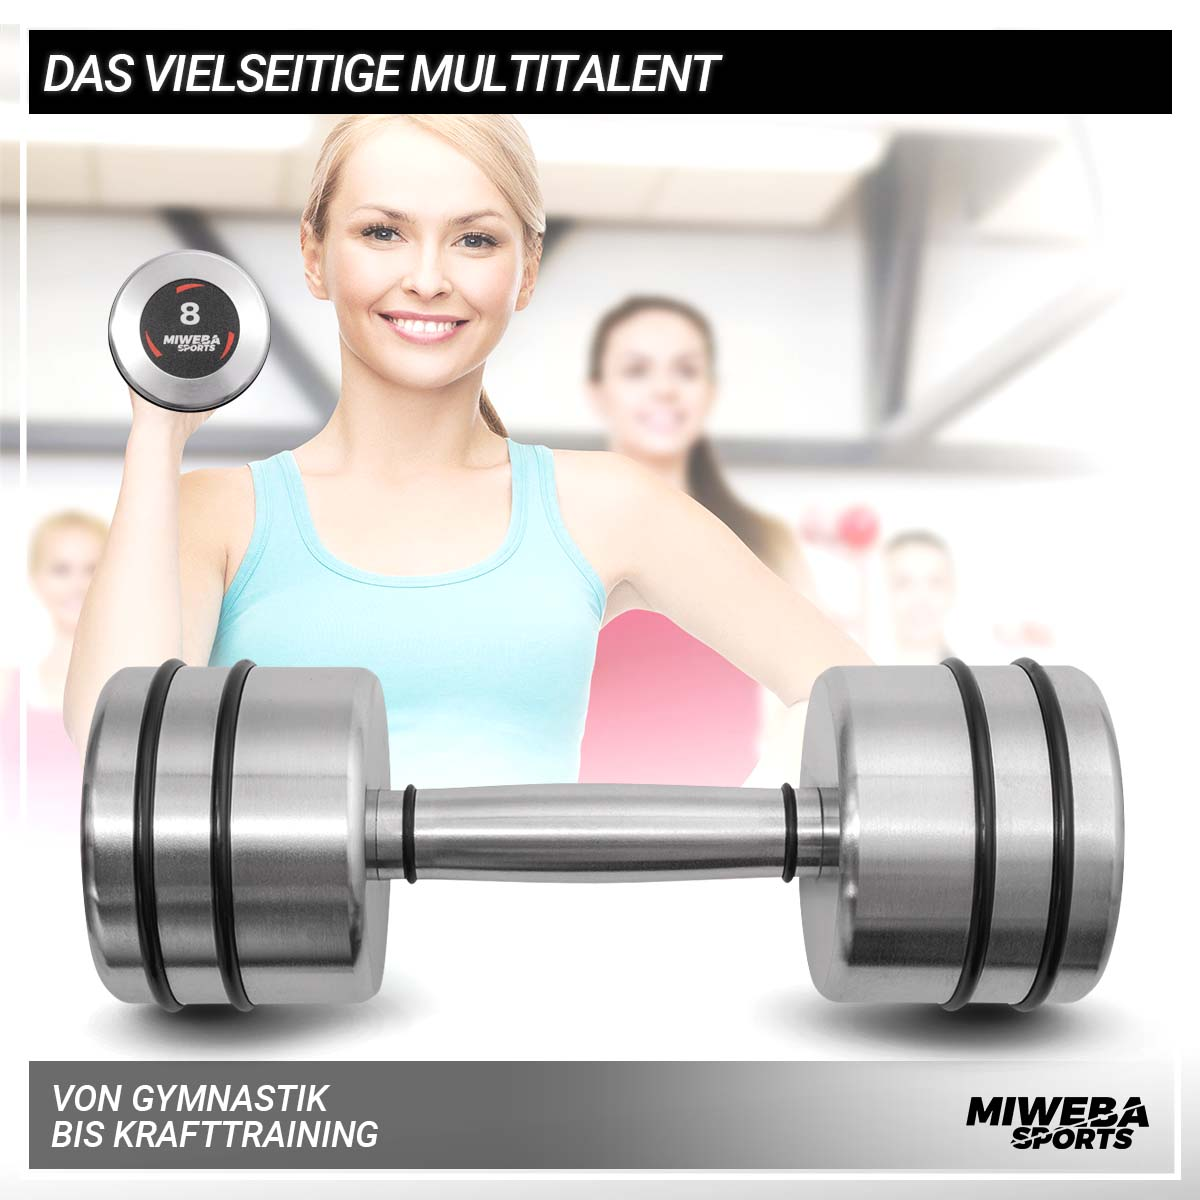 8.0 silber SPORTS Hanteln Chrom kg 2x MIWEBA Fitnesszubehör Matt Kurzhanteln,